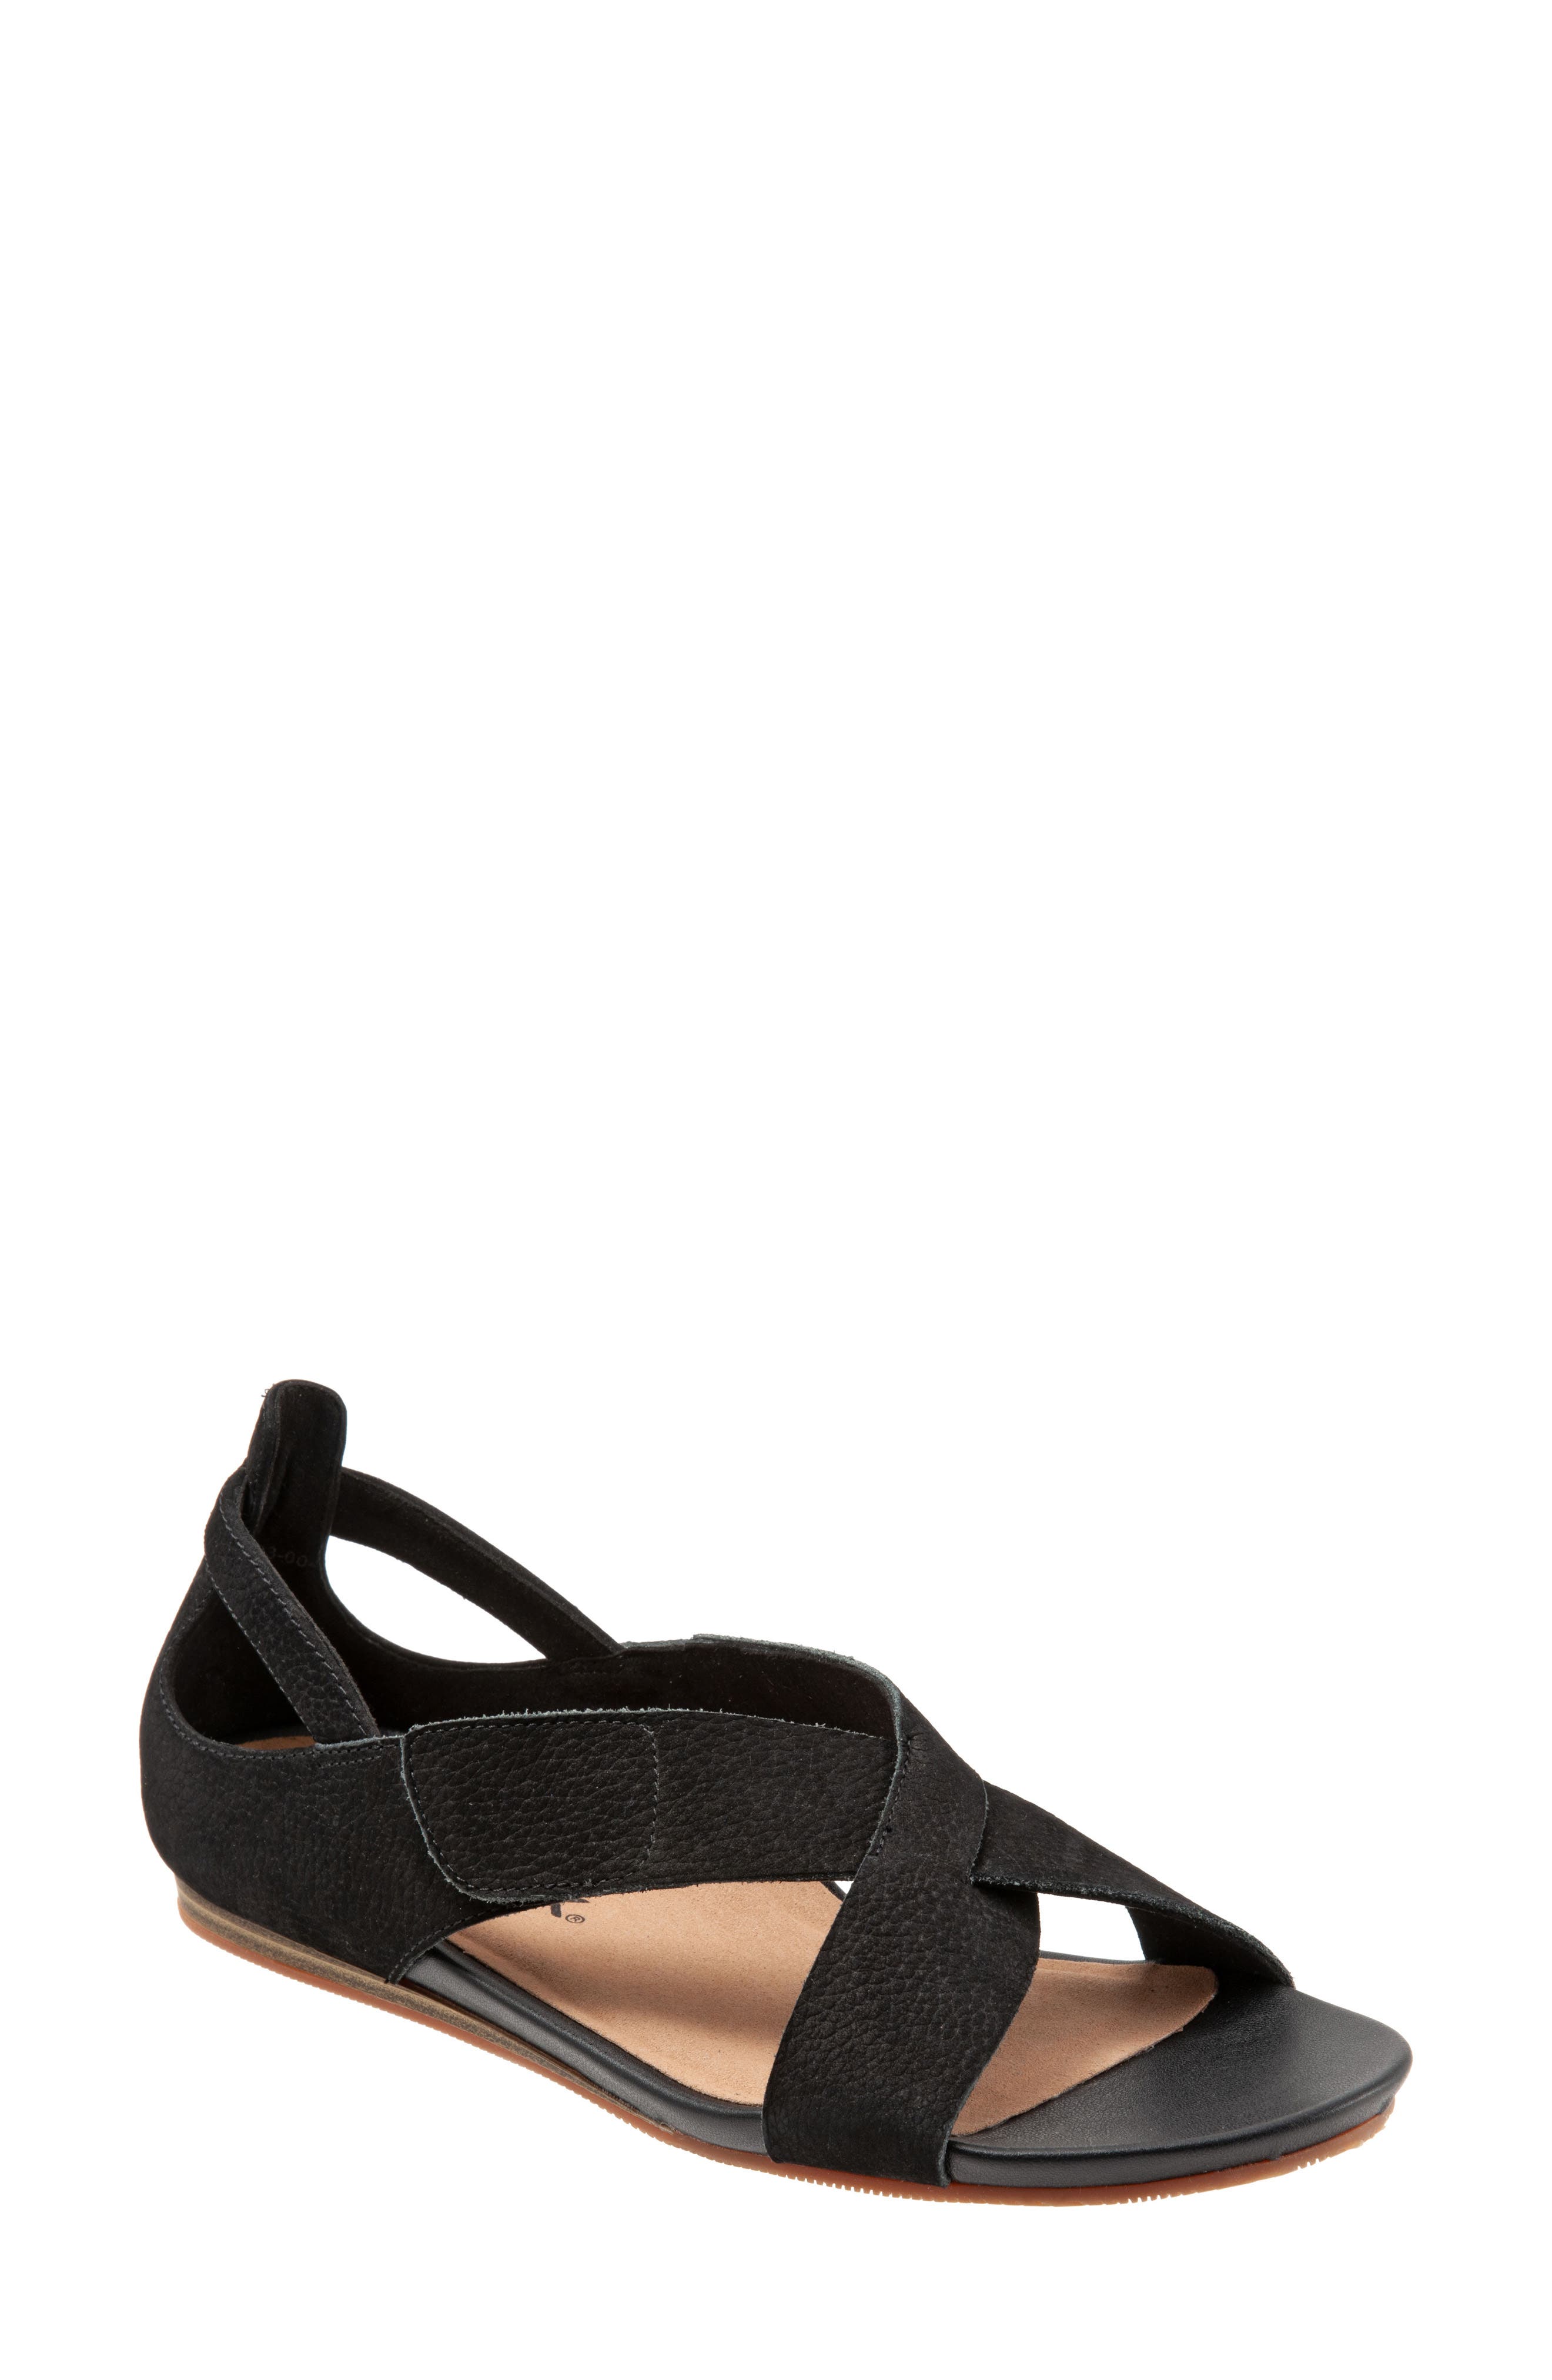 Softwalk Camilla Cross Strap Sandal In Black Nubuck Leather